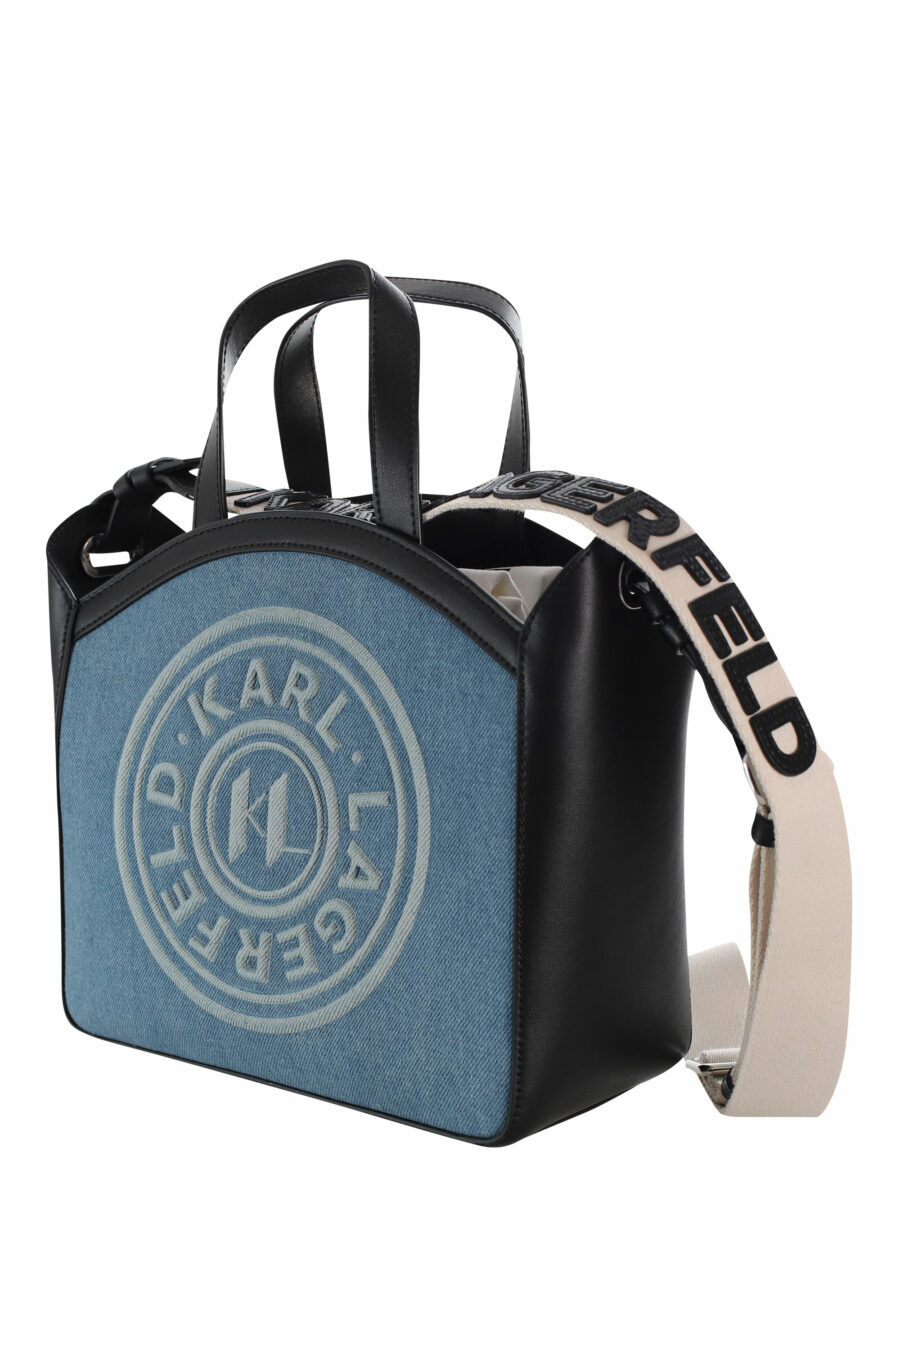 Tote bag azul con logo "k/circle" monocrómatico - 8720744234722 2